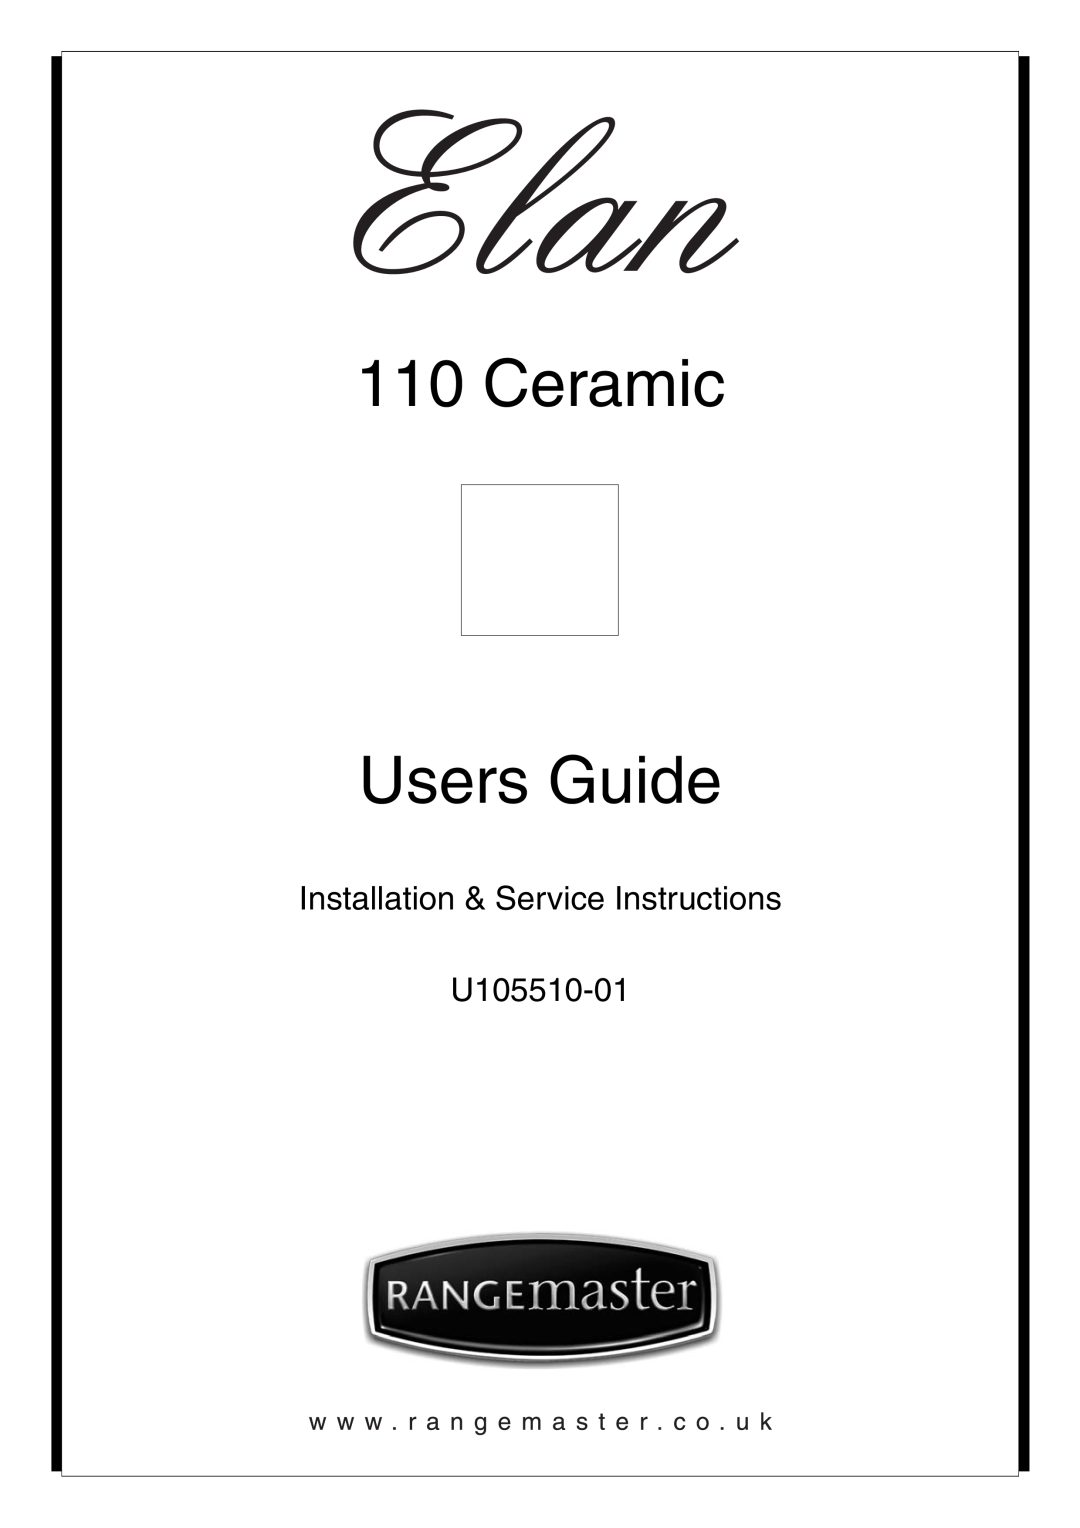 Rangemaster manual Ceramic Users Guide, Installation & Service Instructions U105510-01 